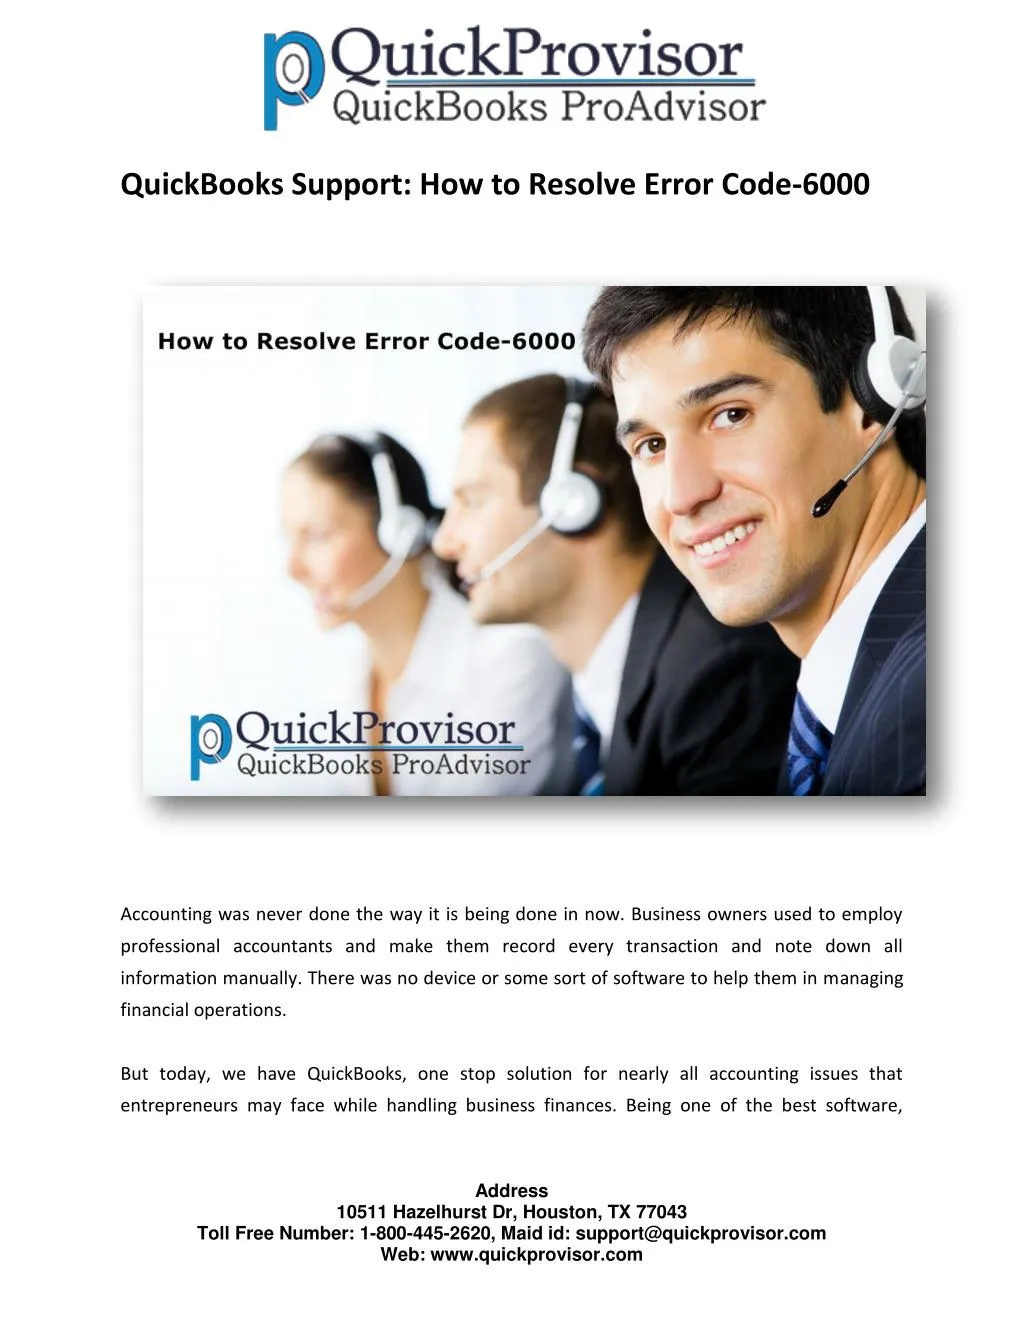 quickbooks support how to resolve error code 6000